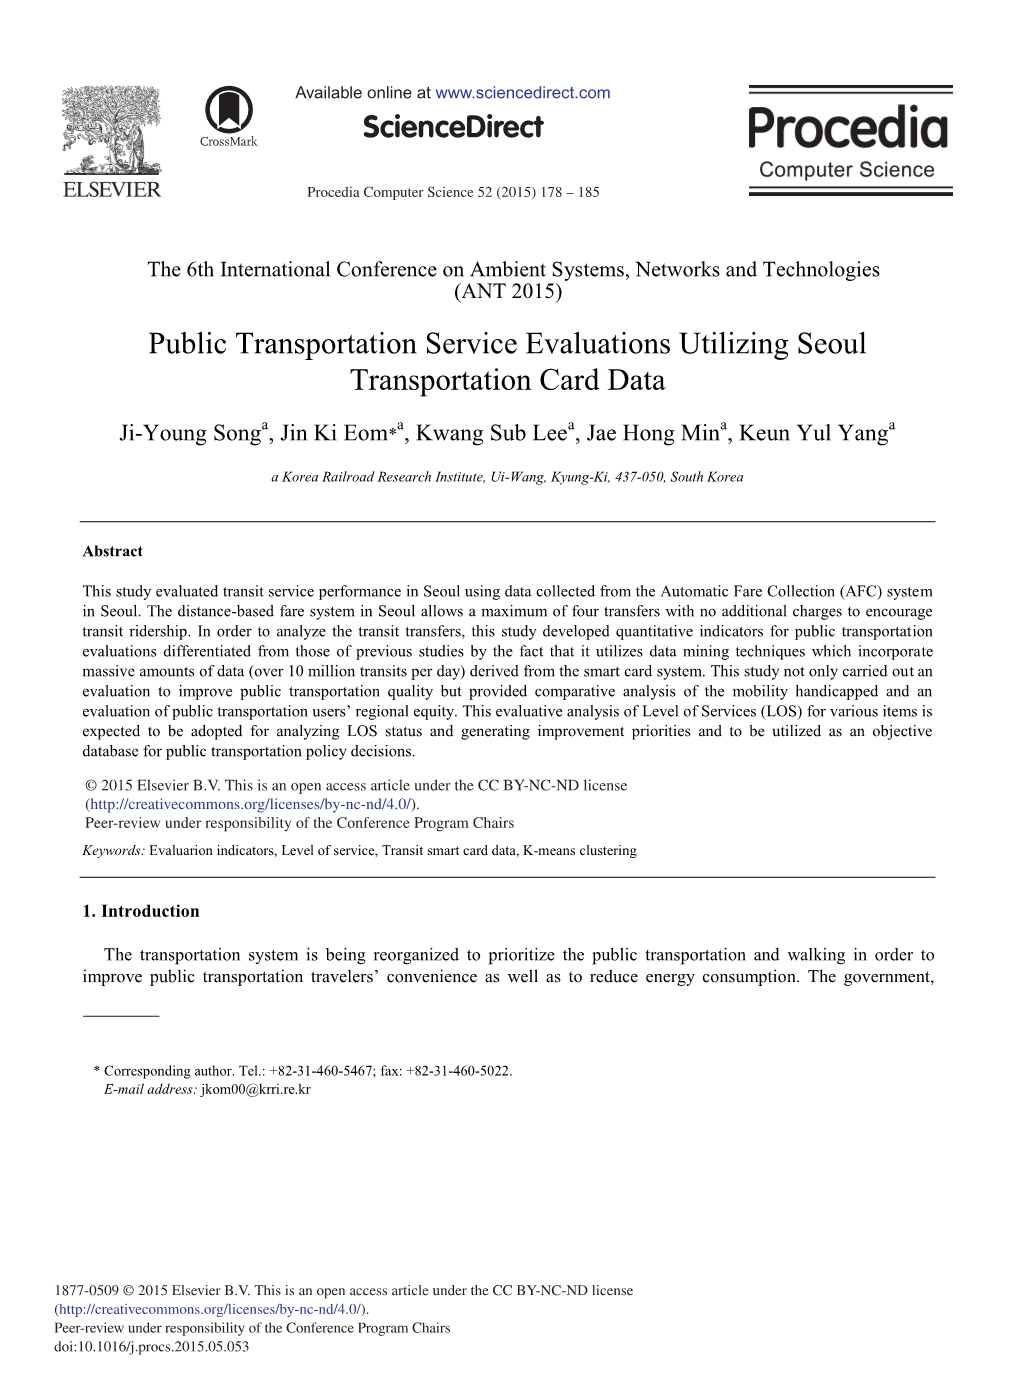 Public Transportation Service Evaluations Utilizing Seoul Transportation Card Data